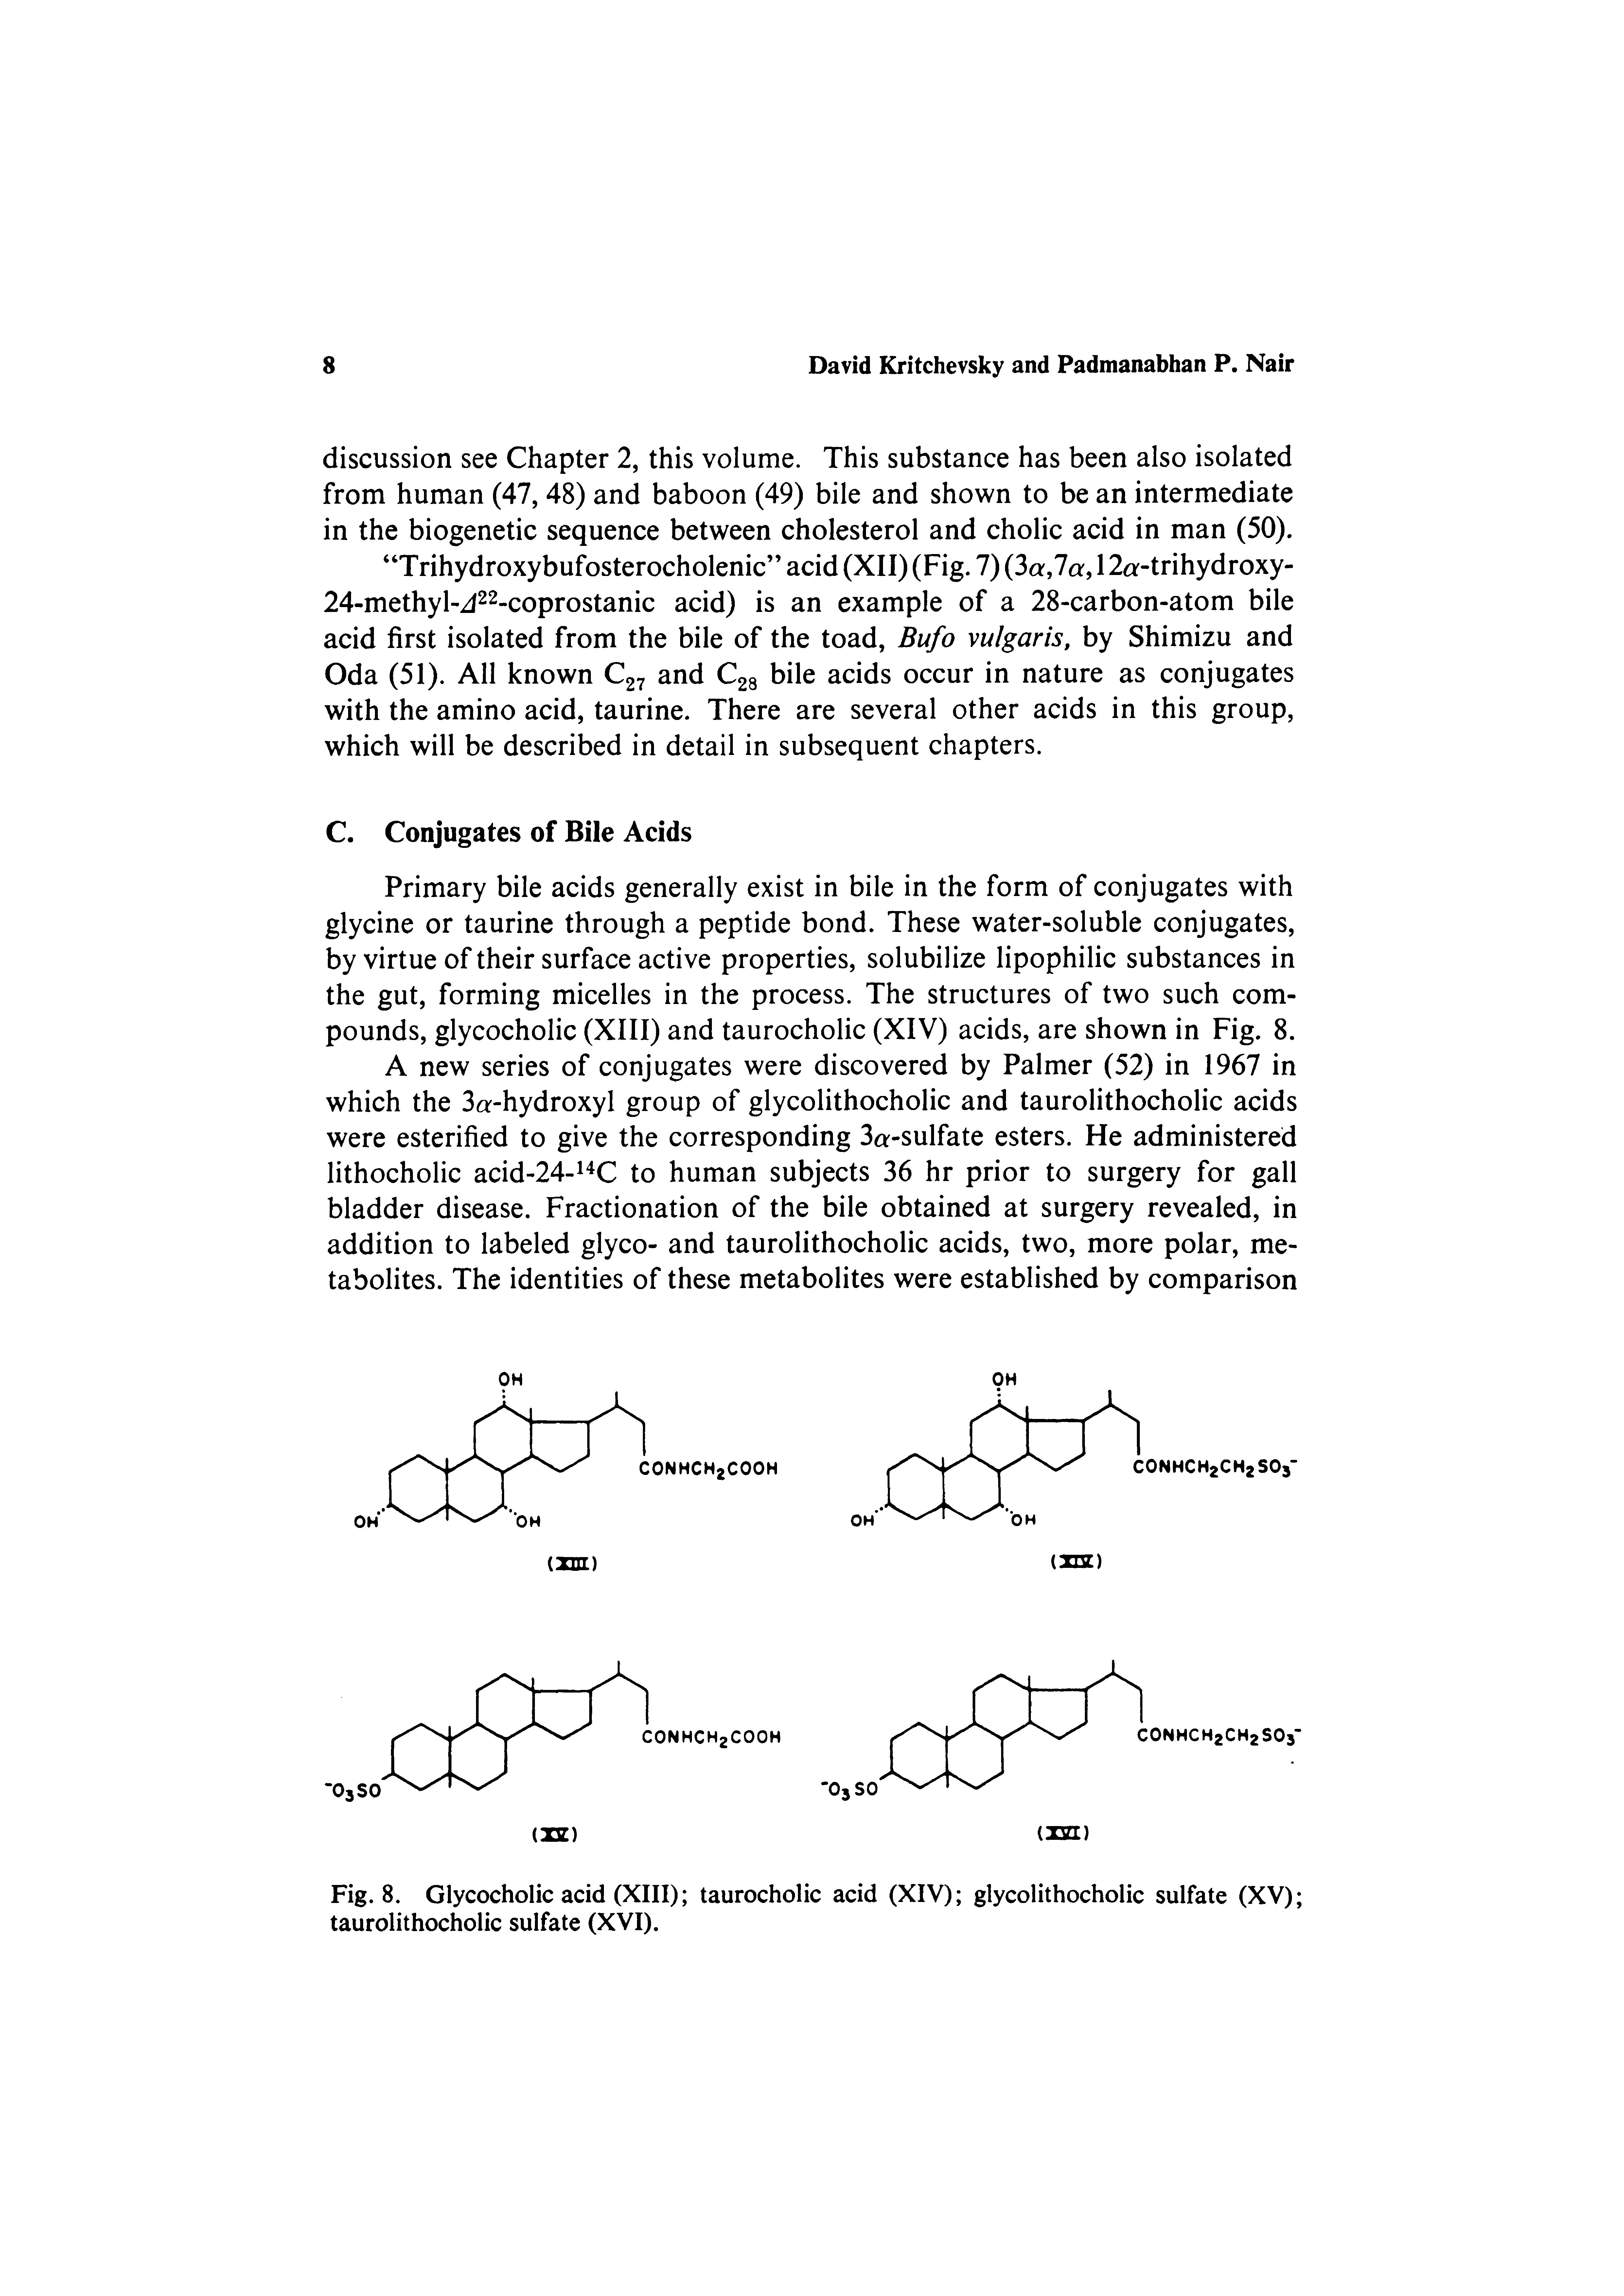 Fig. 8. Glycocholic acid (XIII) taurocholic acid (XIV) glycolithocholic sulfate (XV) taurolithocholic sulfate (XVI).